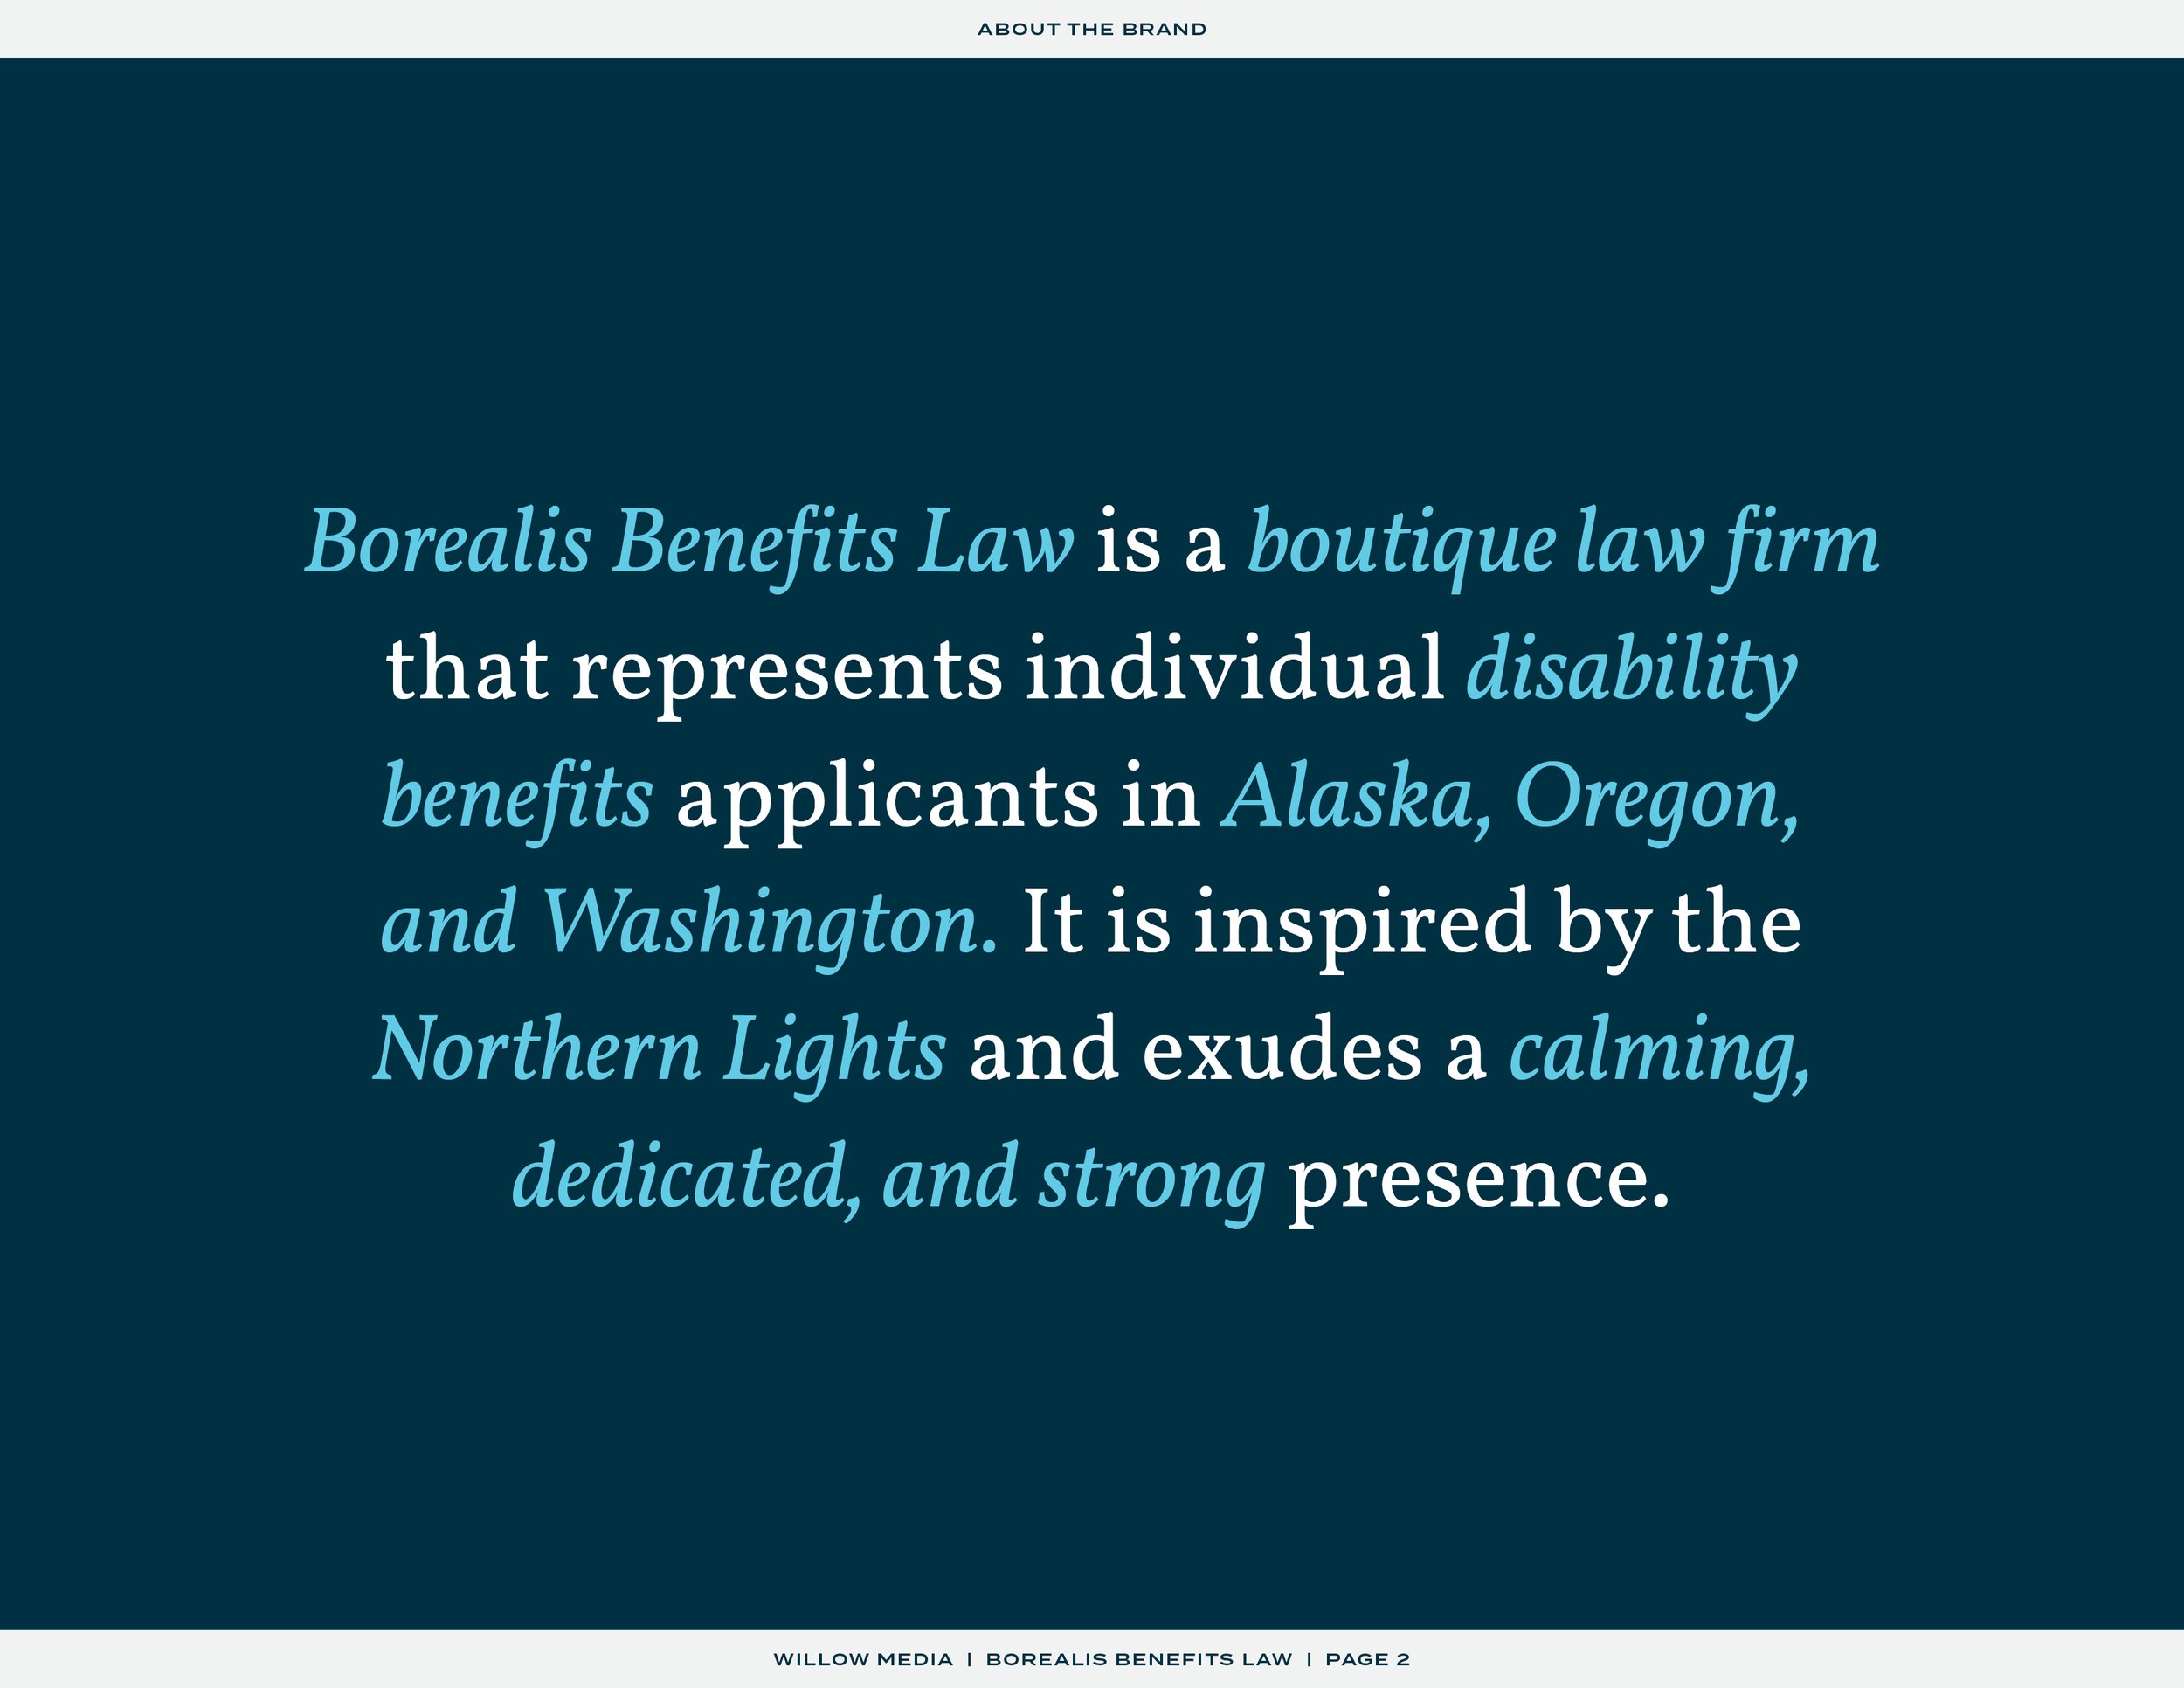 Borealis Benefits Law Brand Presentation | Willow Media2.jpg